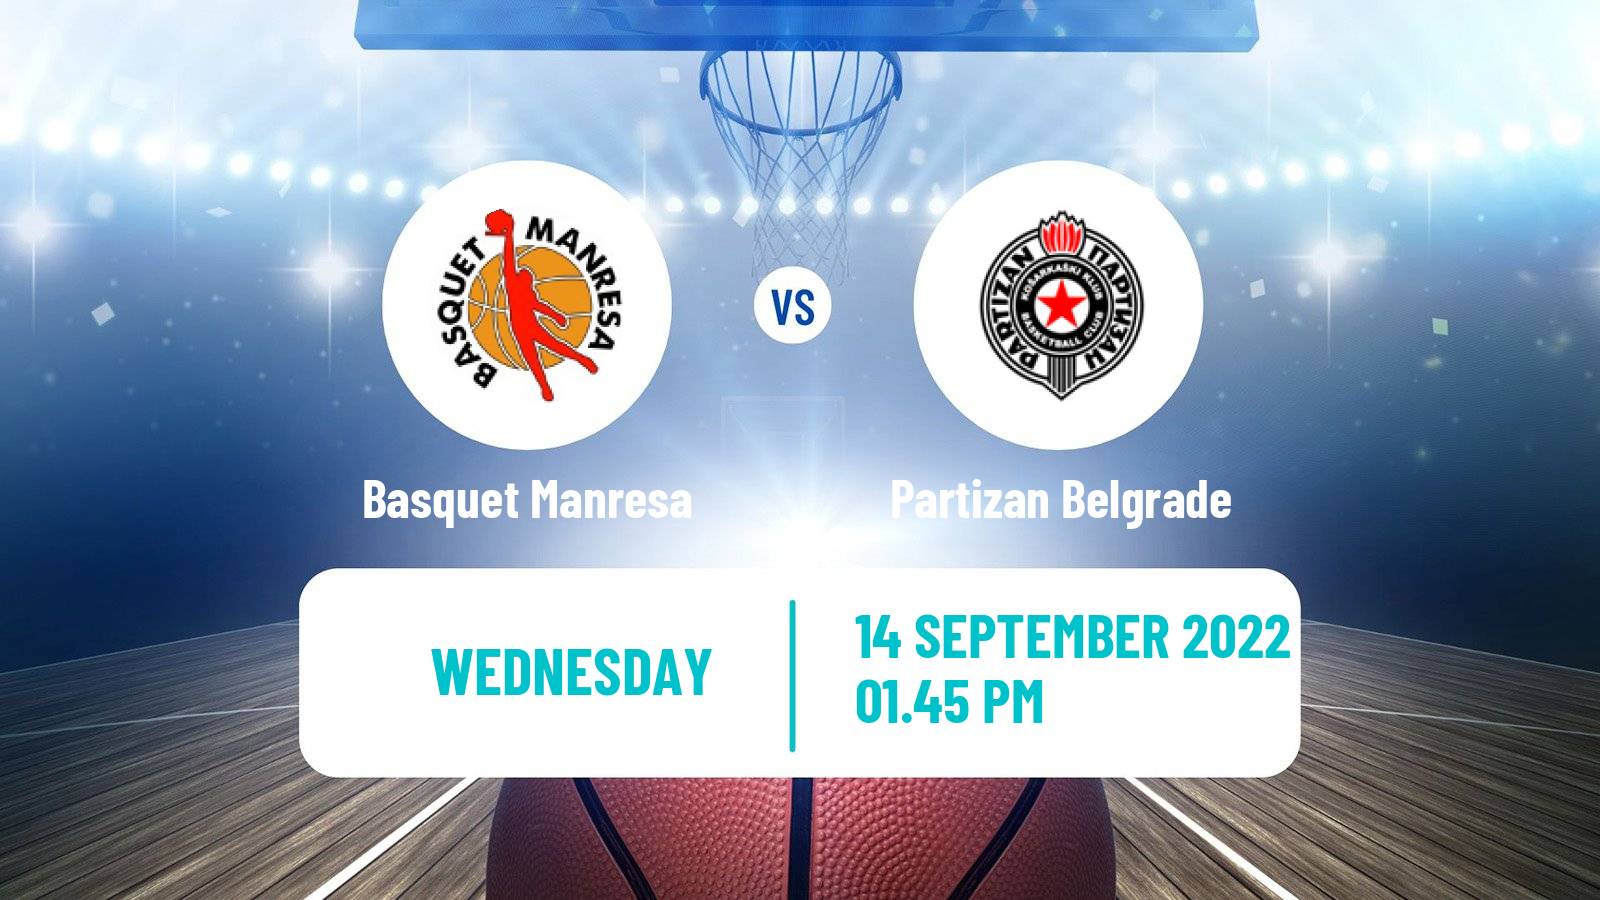 Basketball Club Friendly Basketball Basquet Manresa - Partizan Belgrade